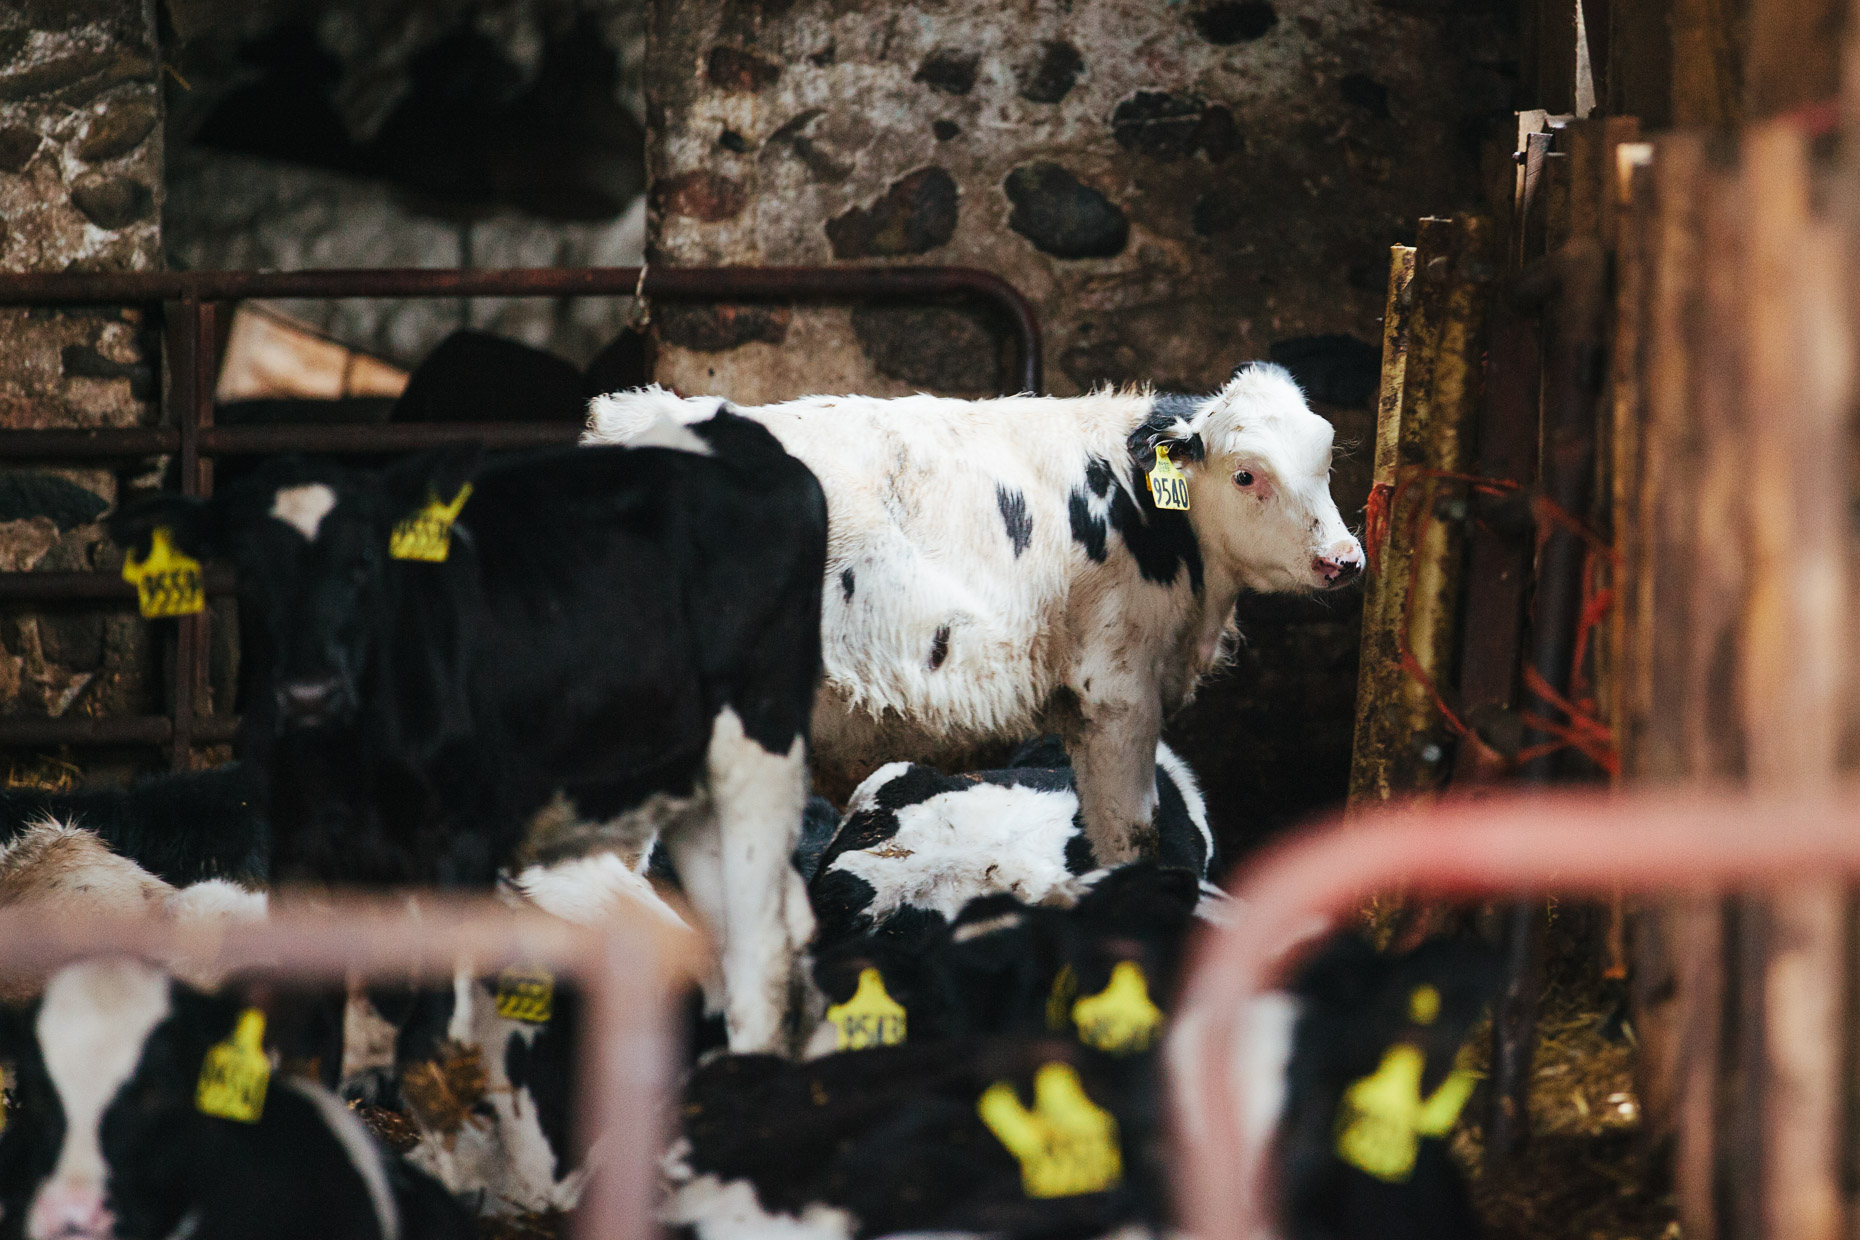 agriculture photographer - a cow inside a barn at a dairy farm